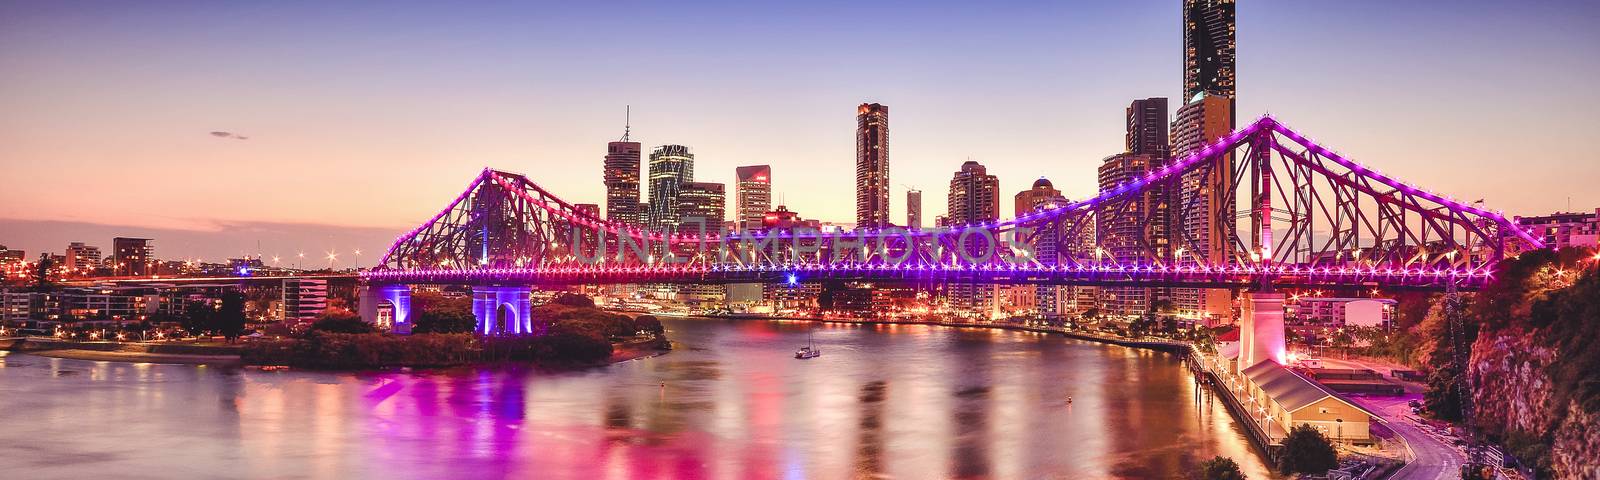 Story Bridge in Brisbane, Queensland, Australia